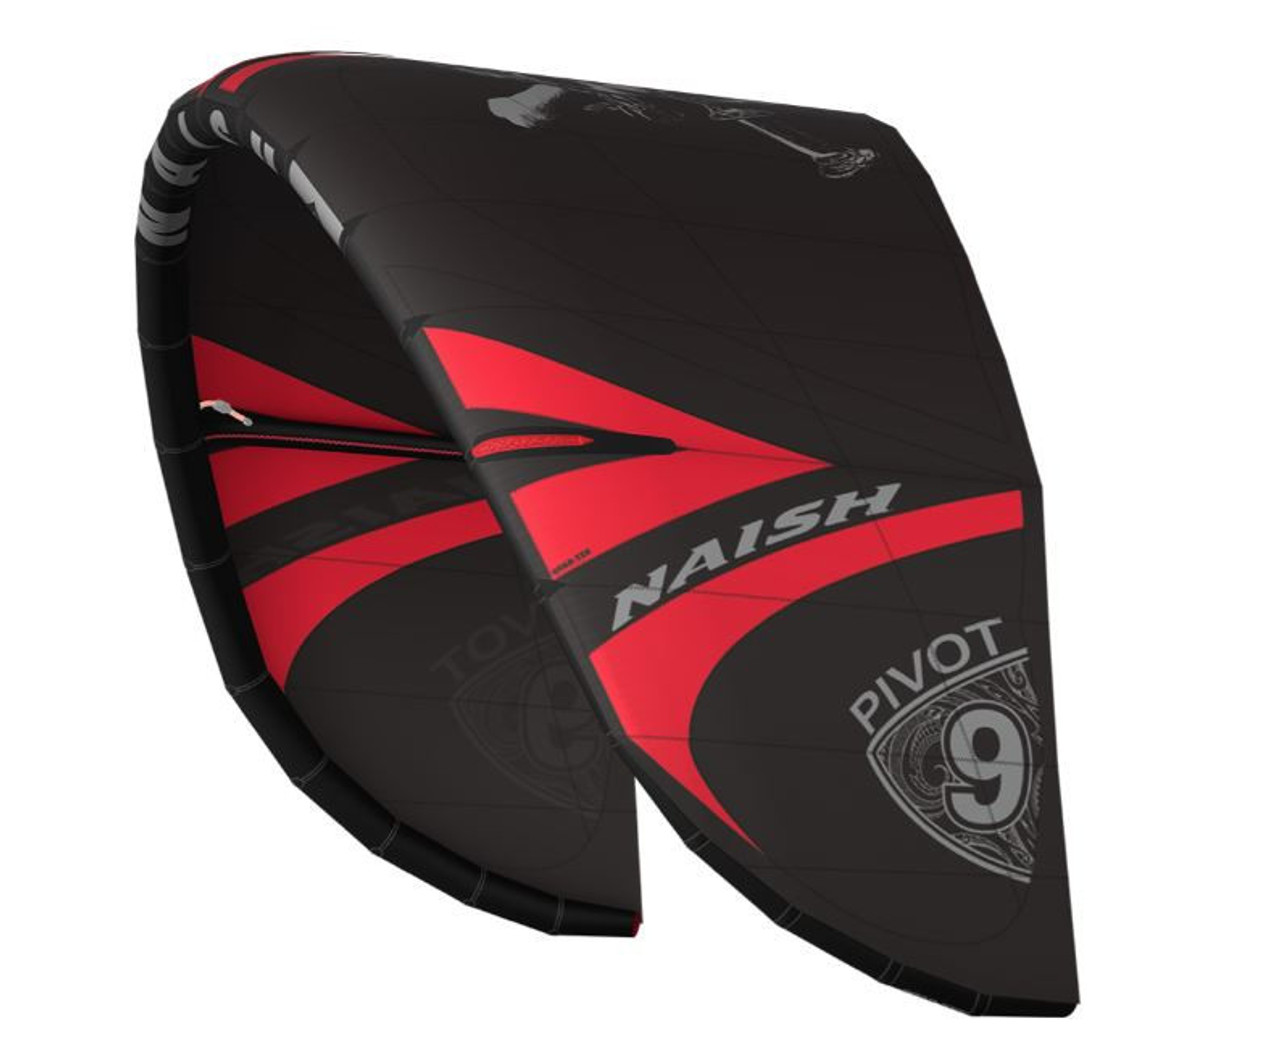 S27 Naish Pivot Limited Edition Kite